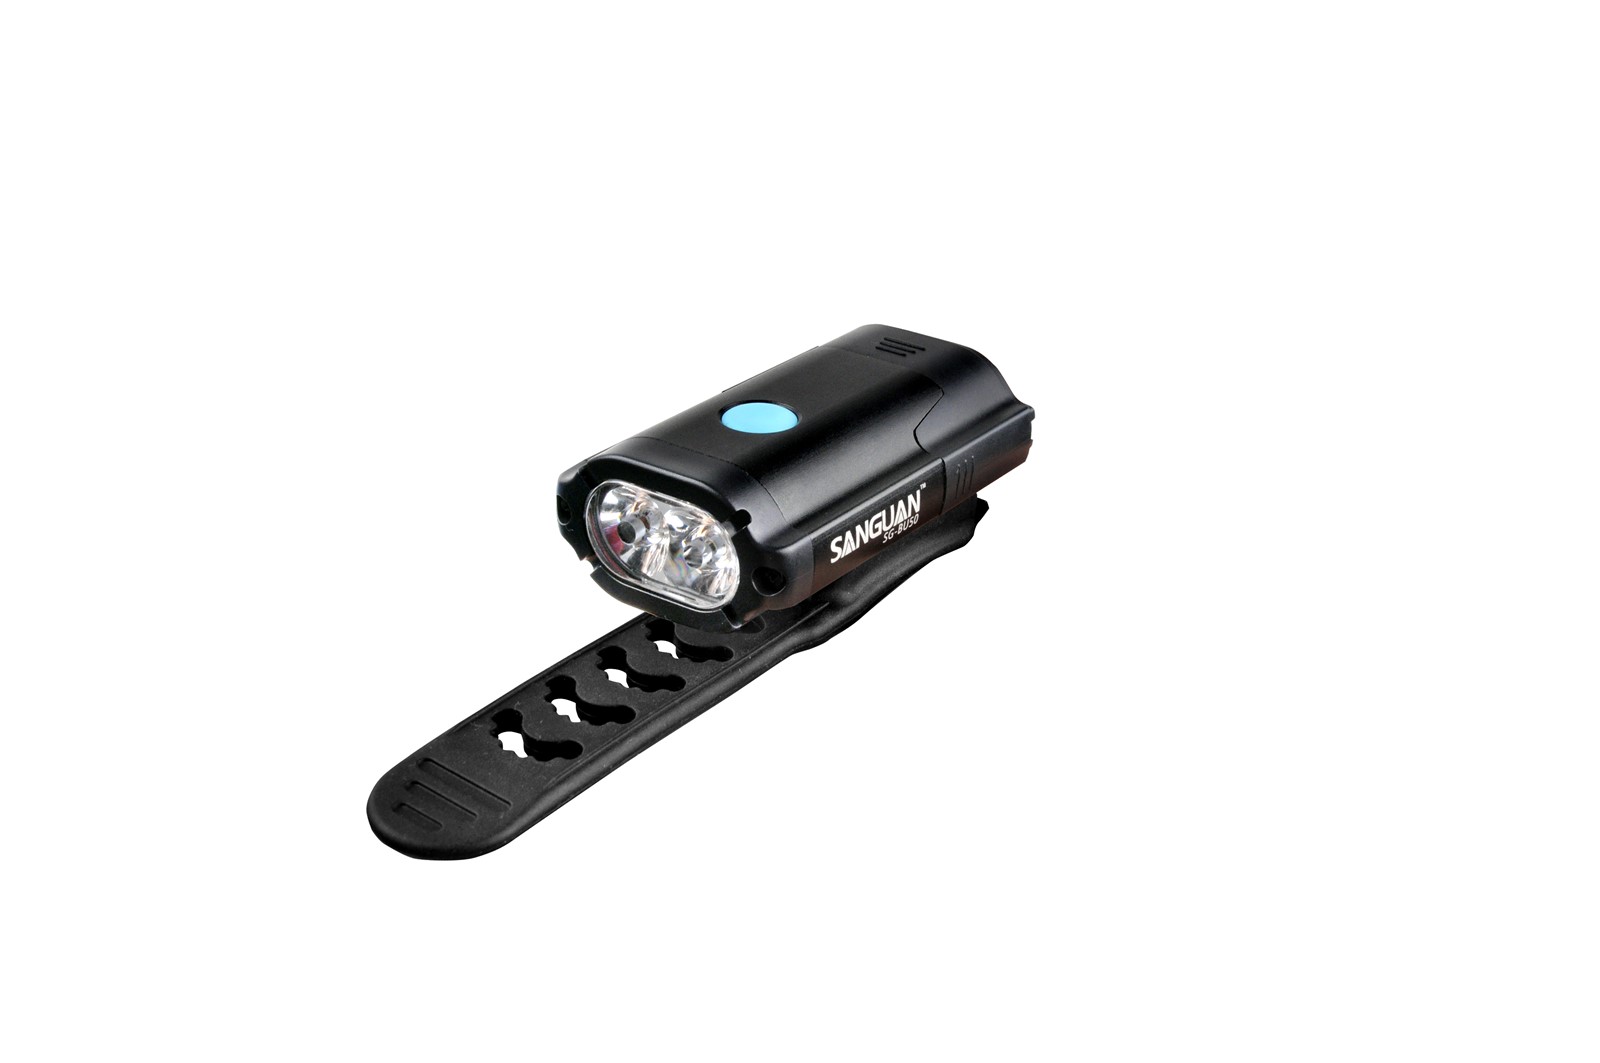 Newest Hot Sale IP65 700lumens High Quality Assured LED Light USB Rechargeable LED Bike Light